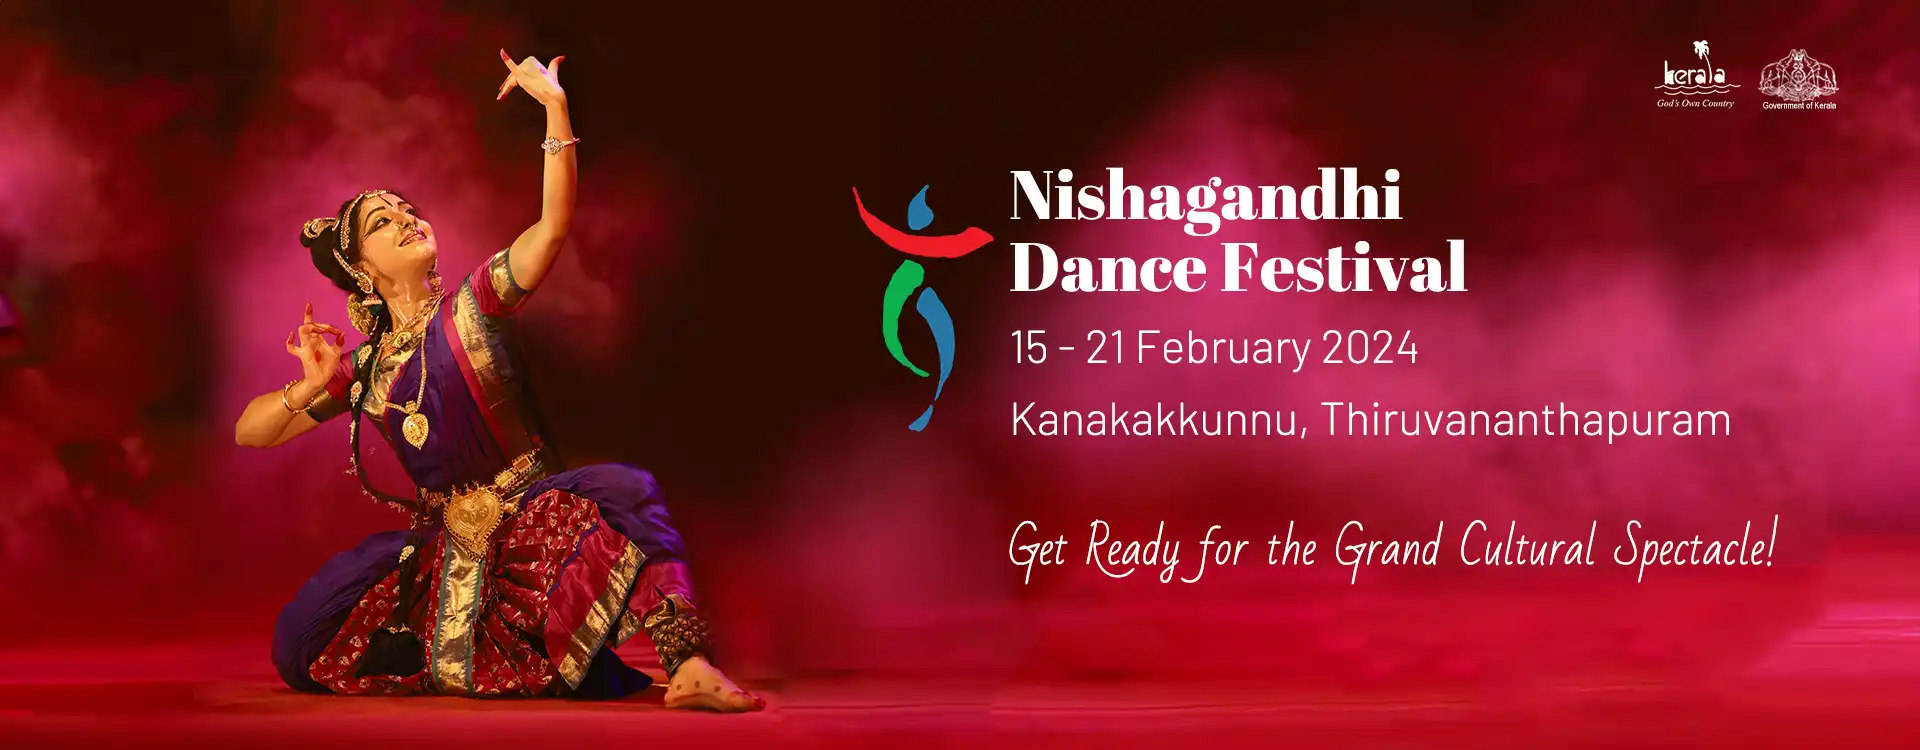 Nishagandhi Dance Festival 2024